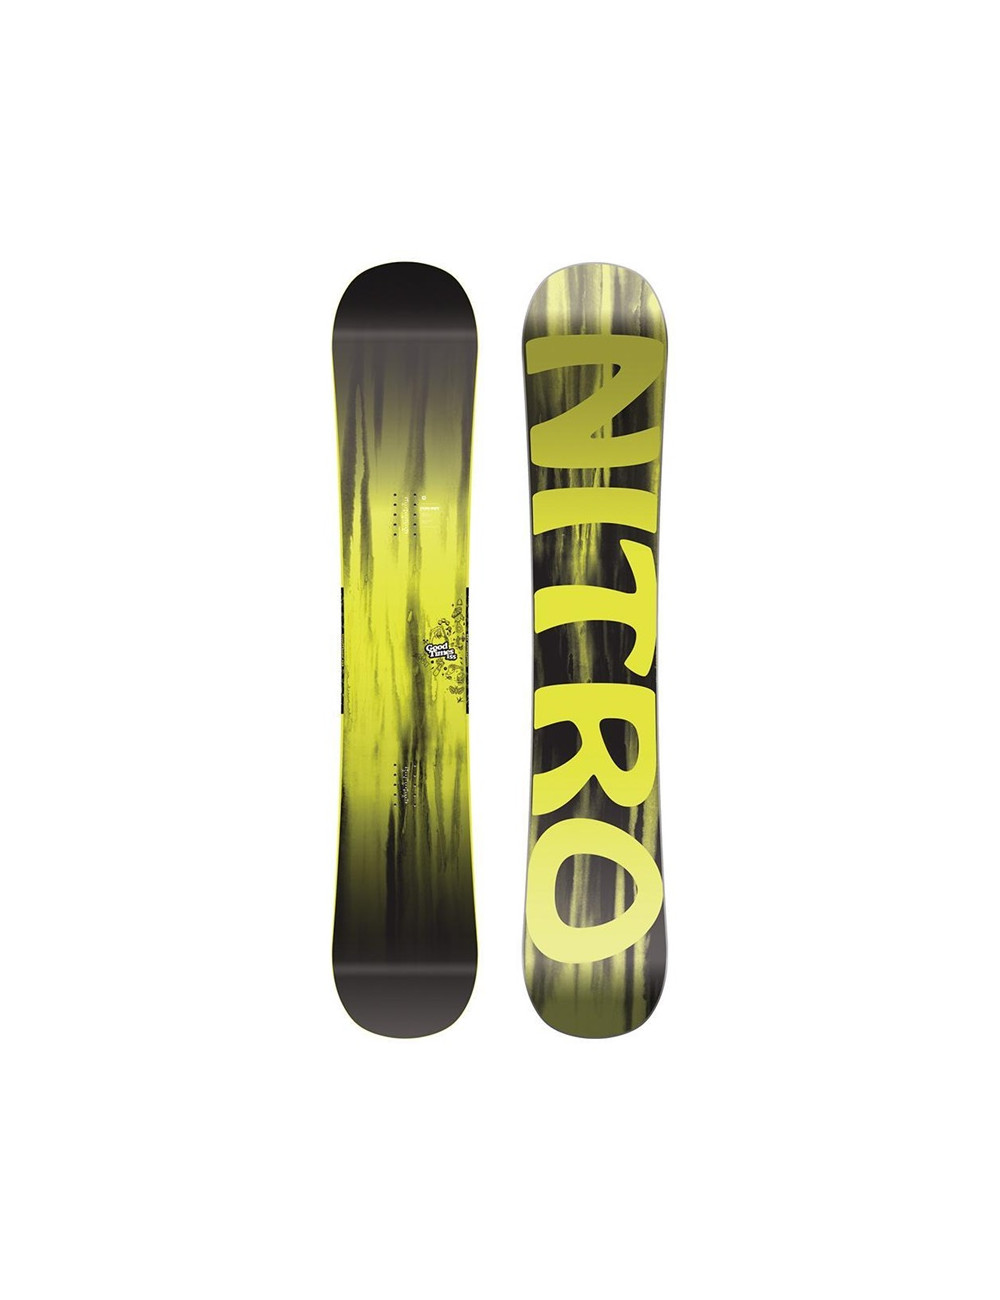 Deska snowboardowa Nitro Good Times